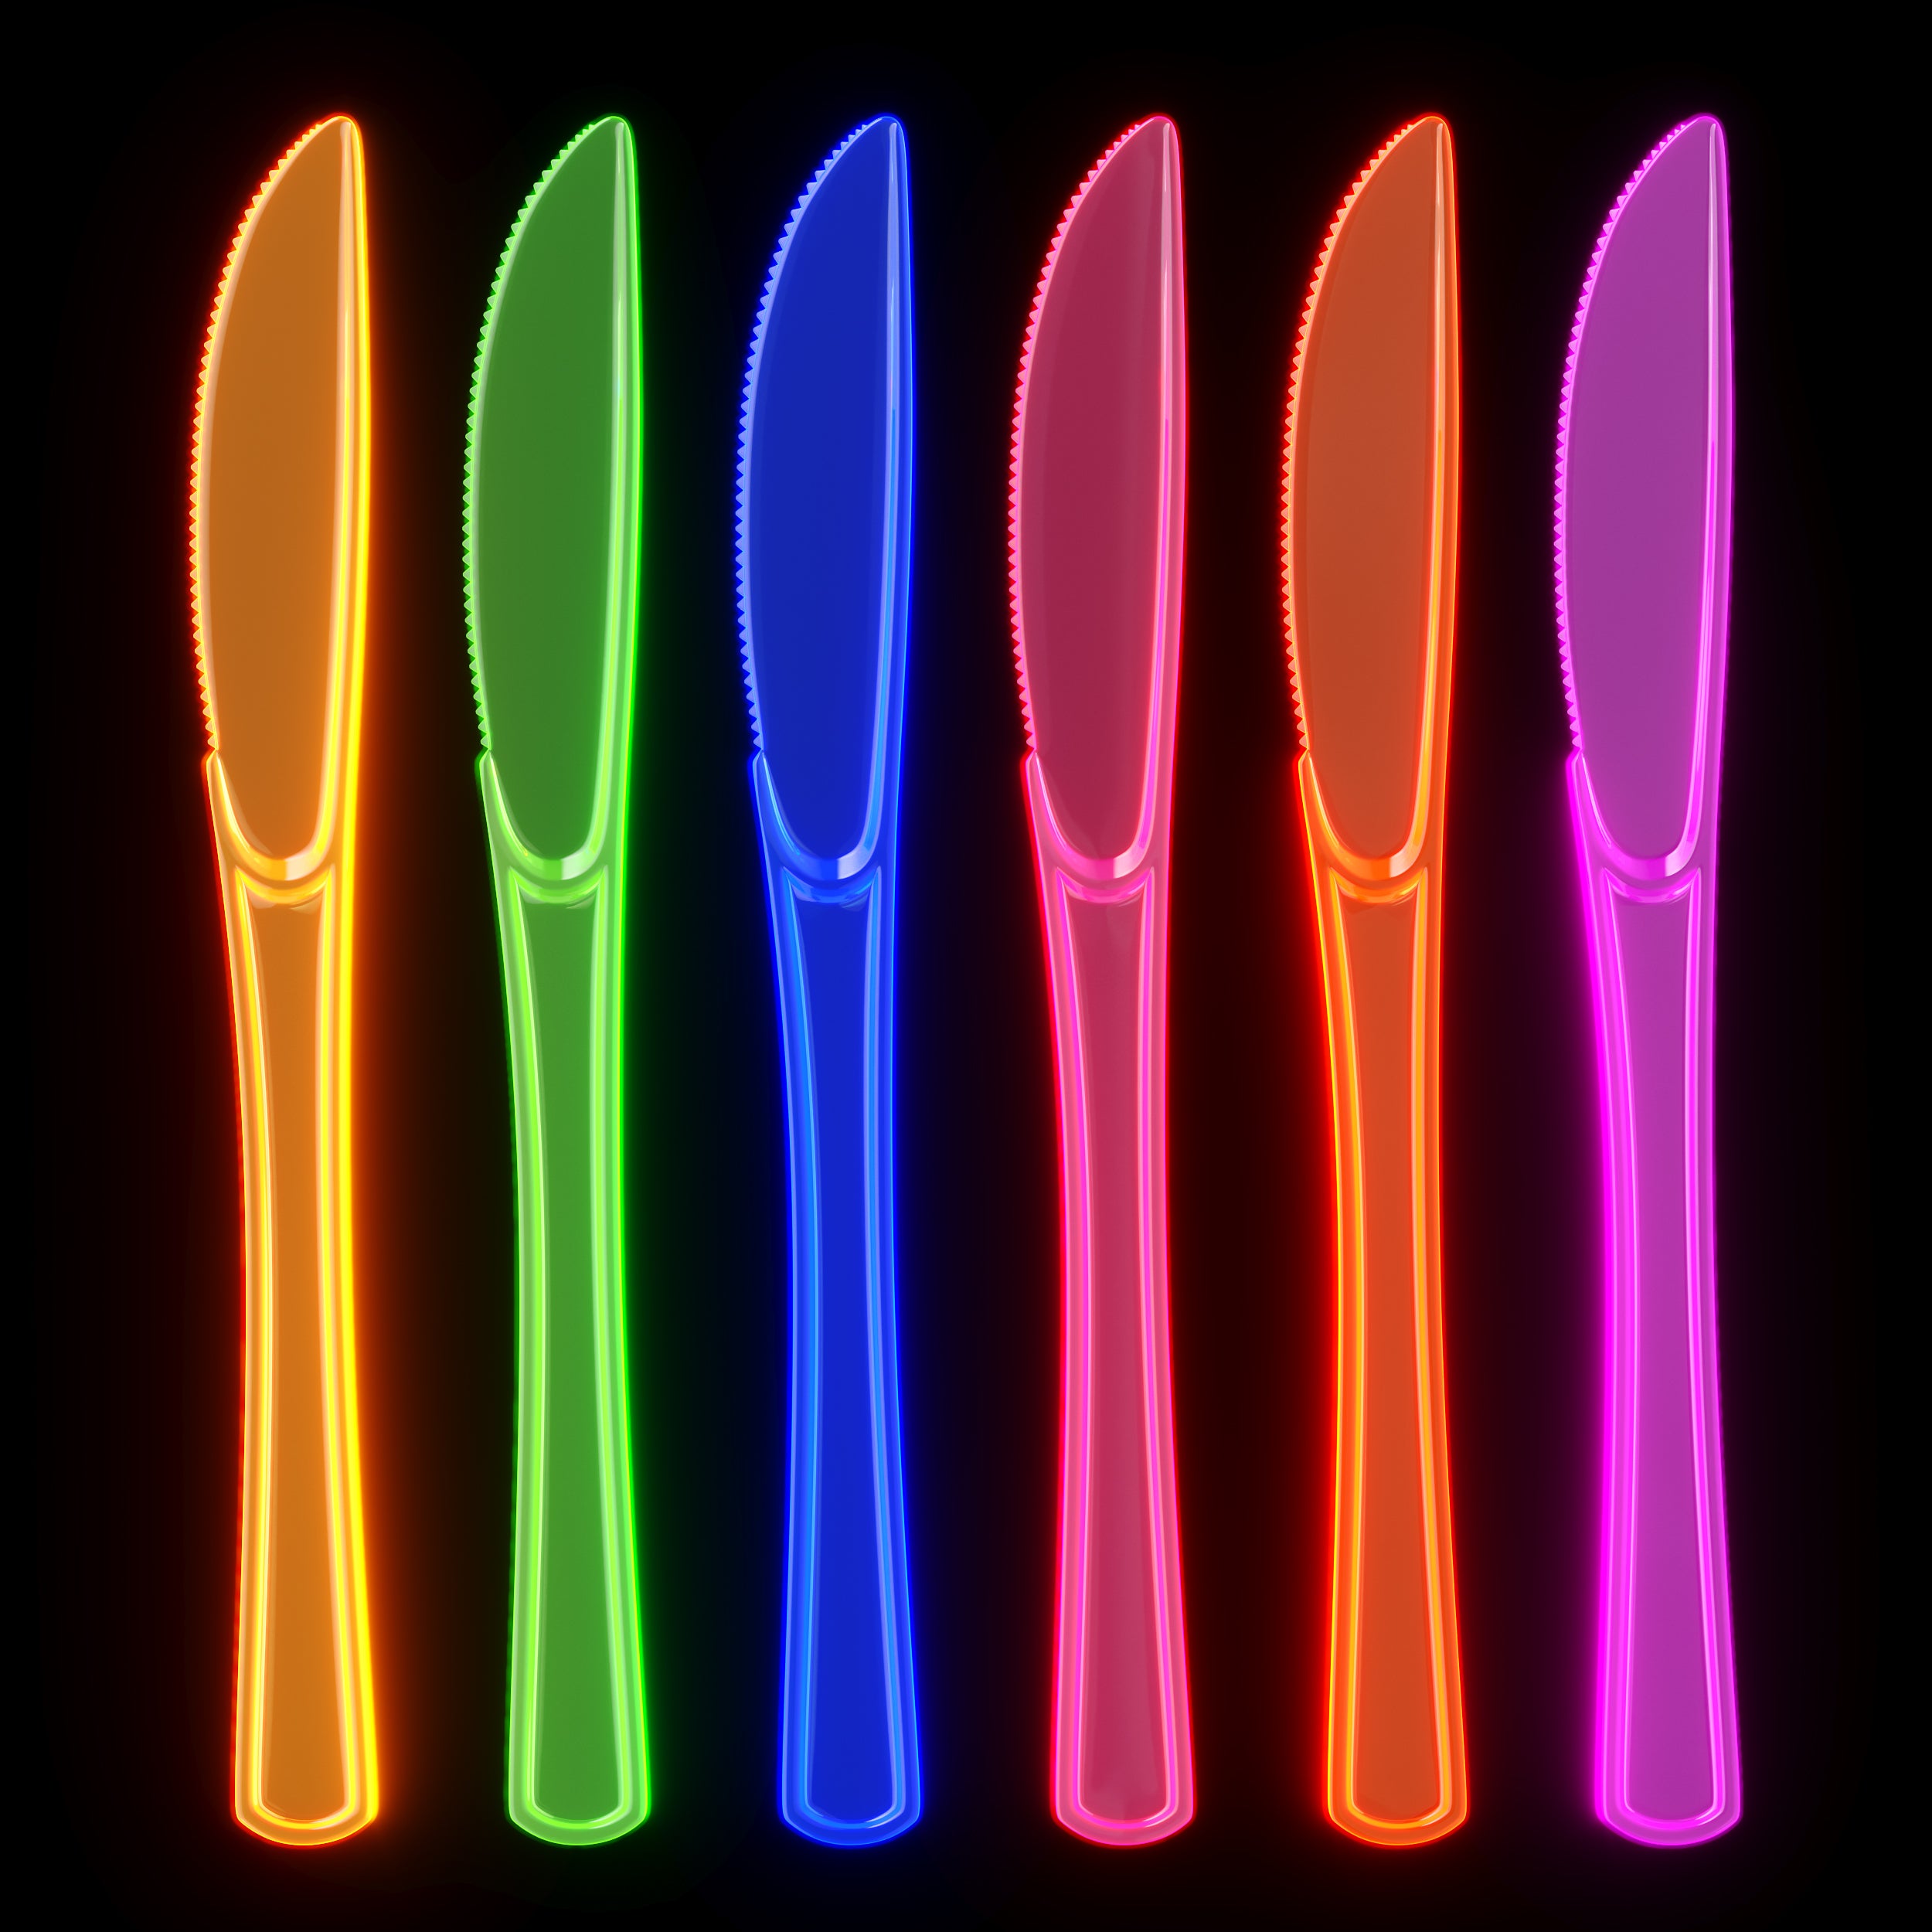 Heavy Duty Neon Plastic Knives - 1440 Ct.